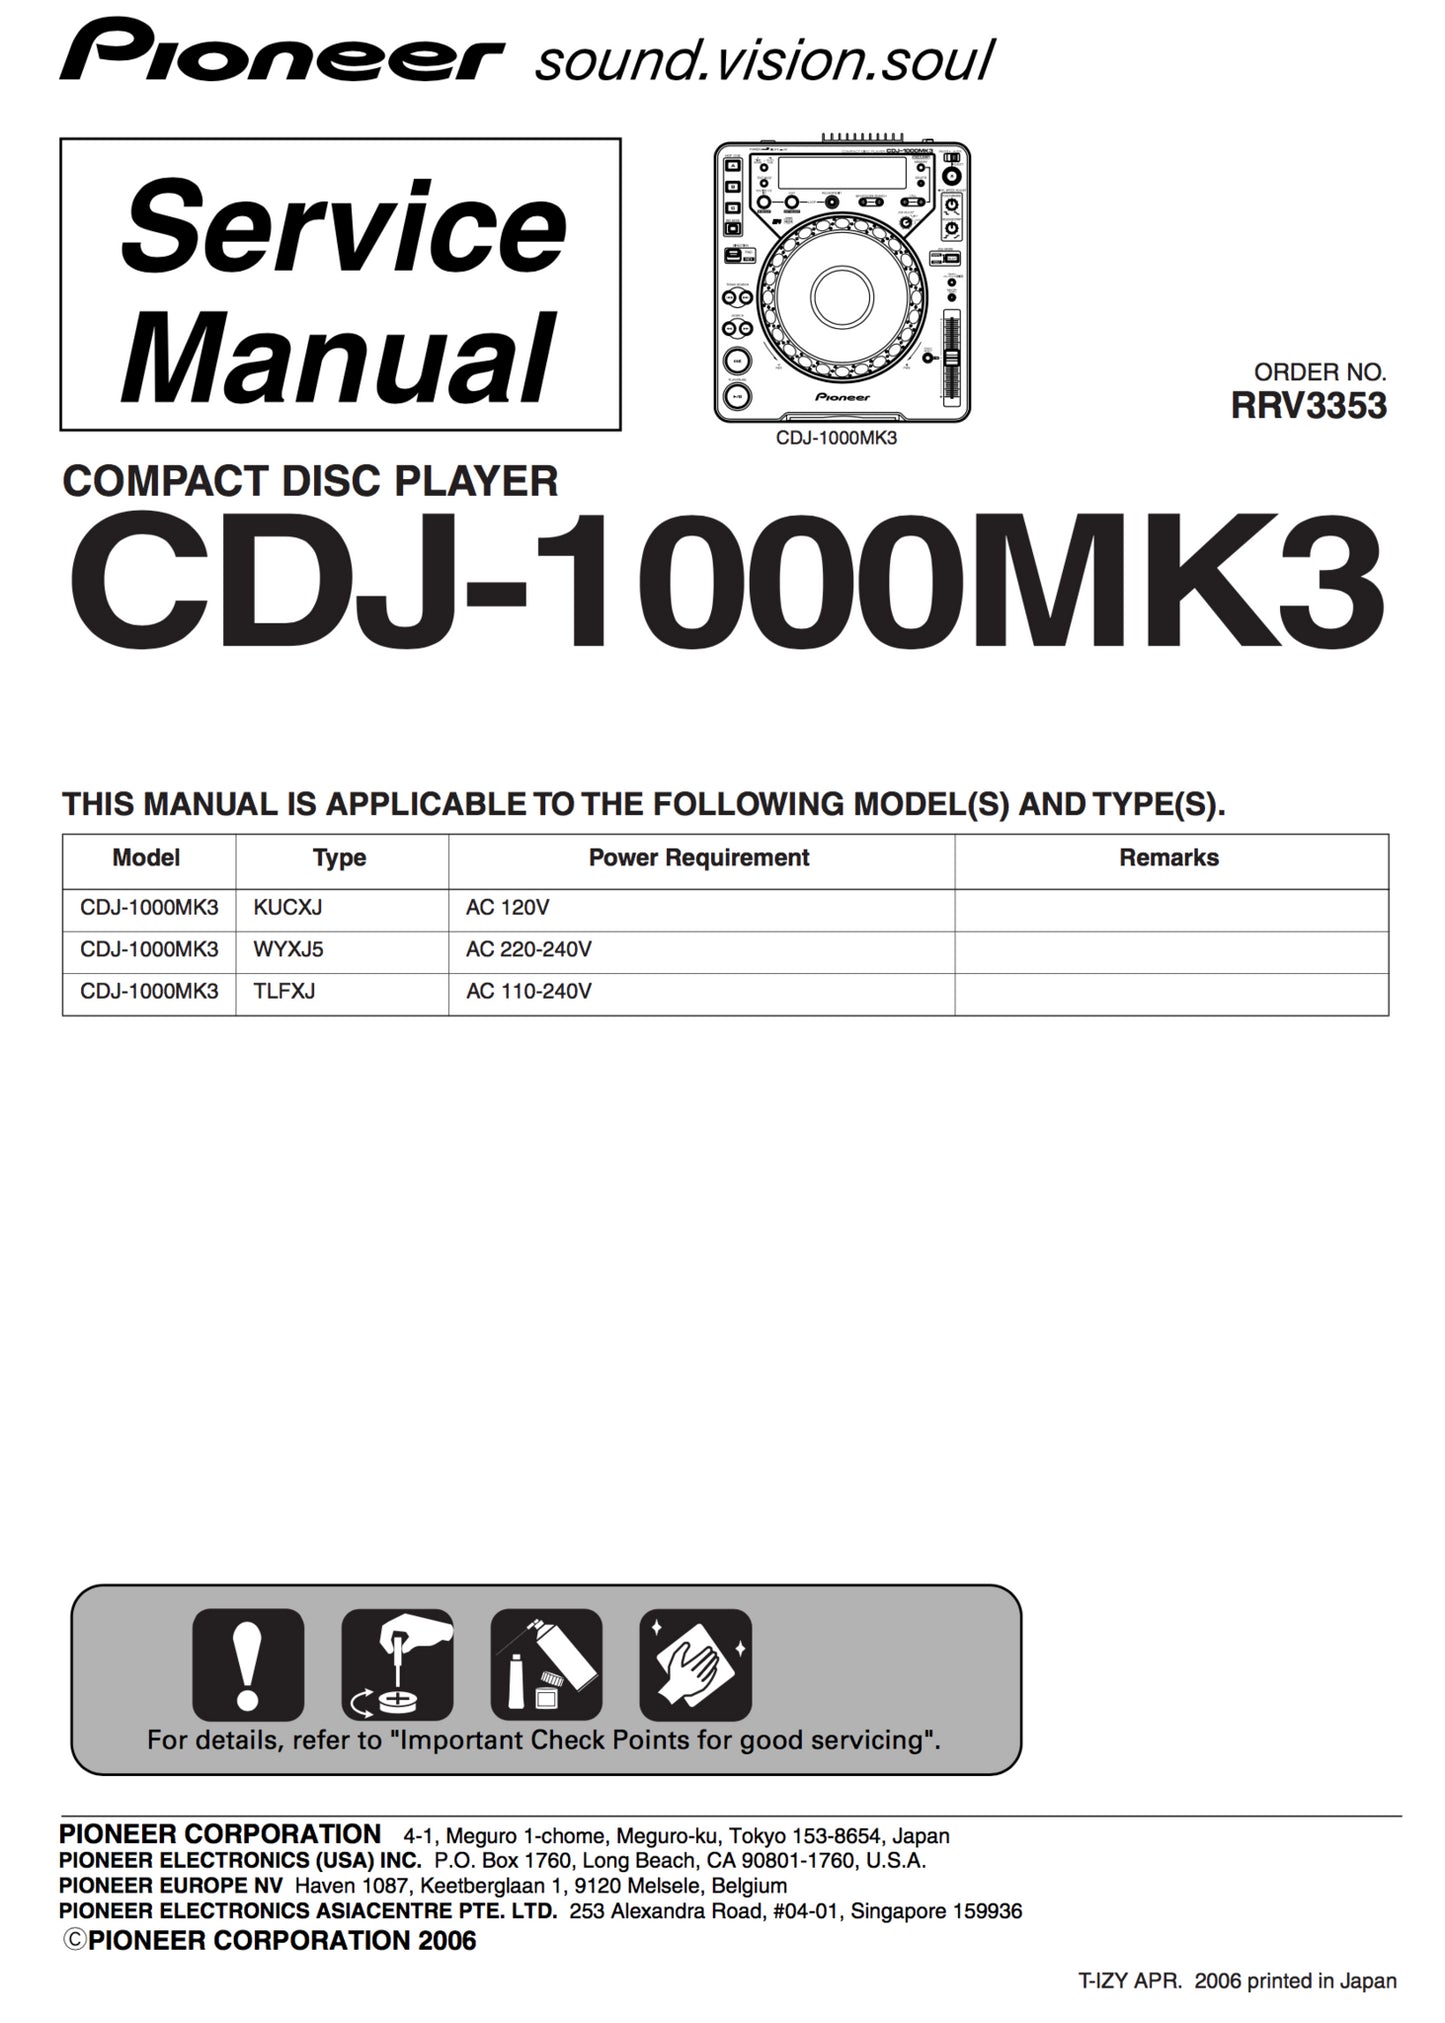 Pioneer CJD-1000MK3 Service Manual Complete